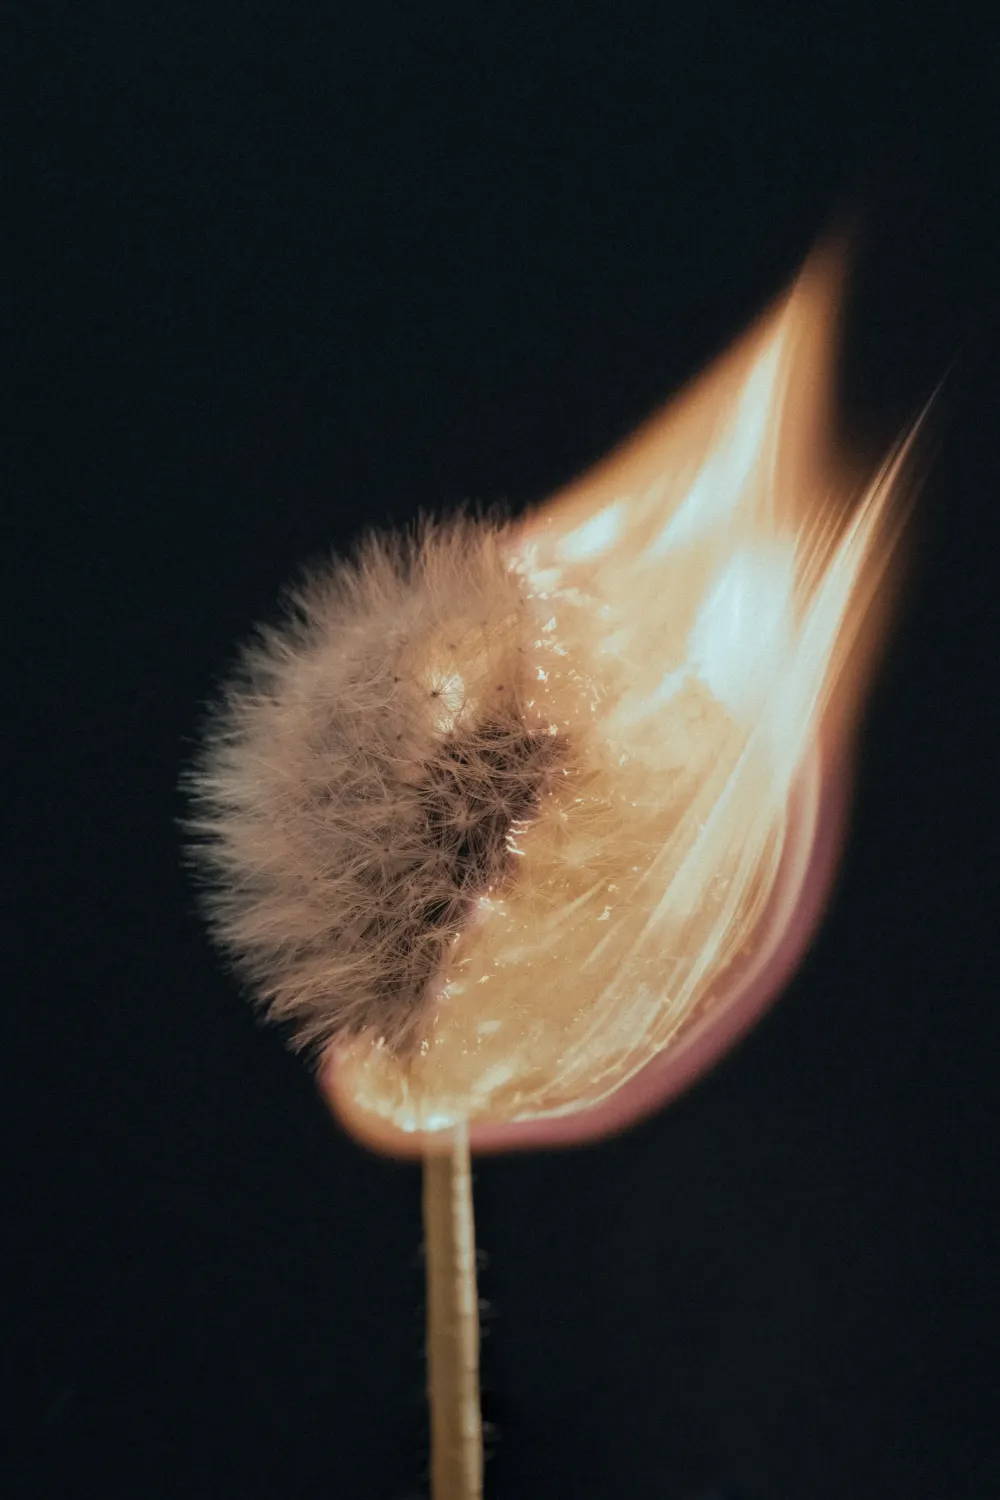 Dandelion on fire against a black background